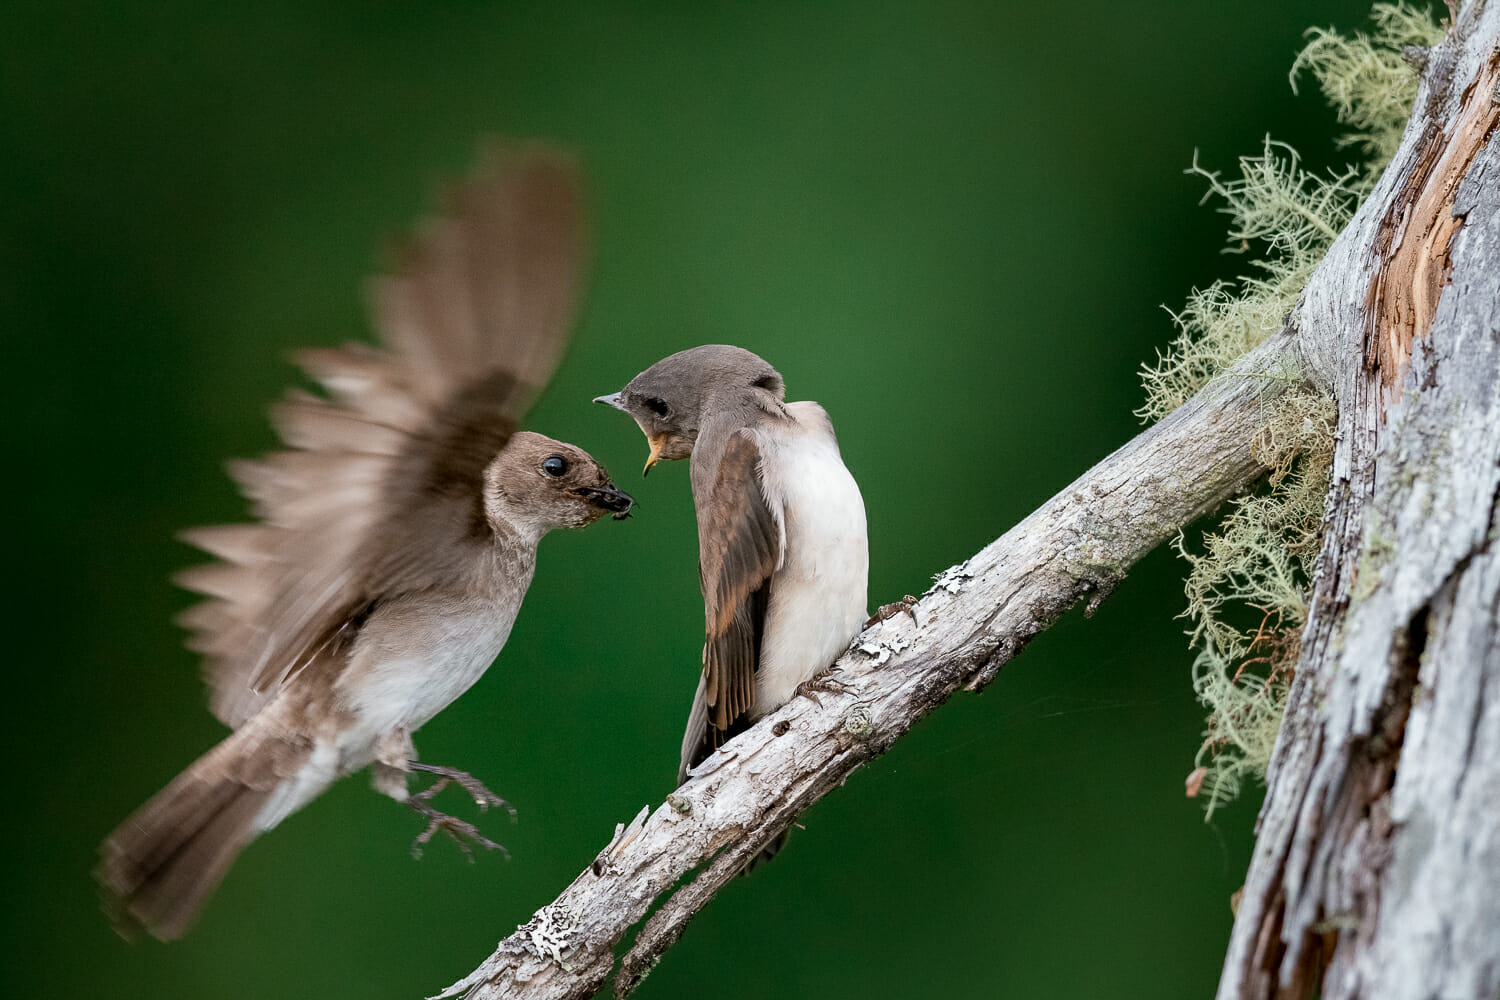 swallow feeding a fledgeling on a branch